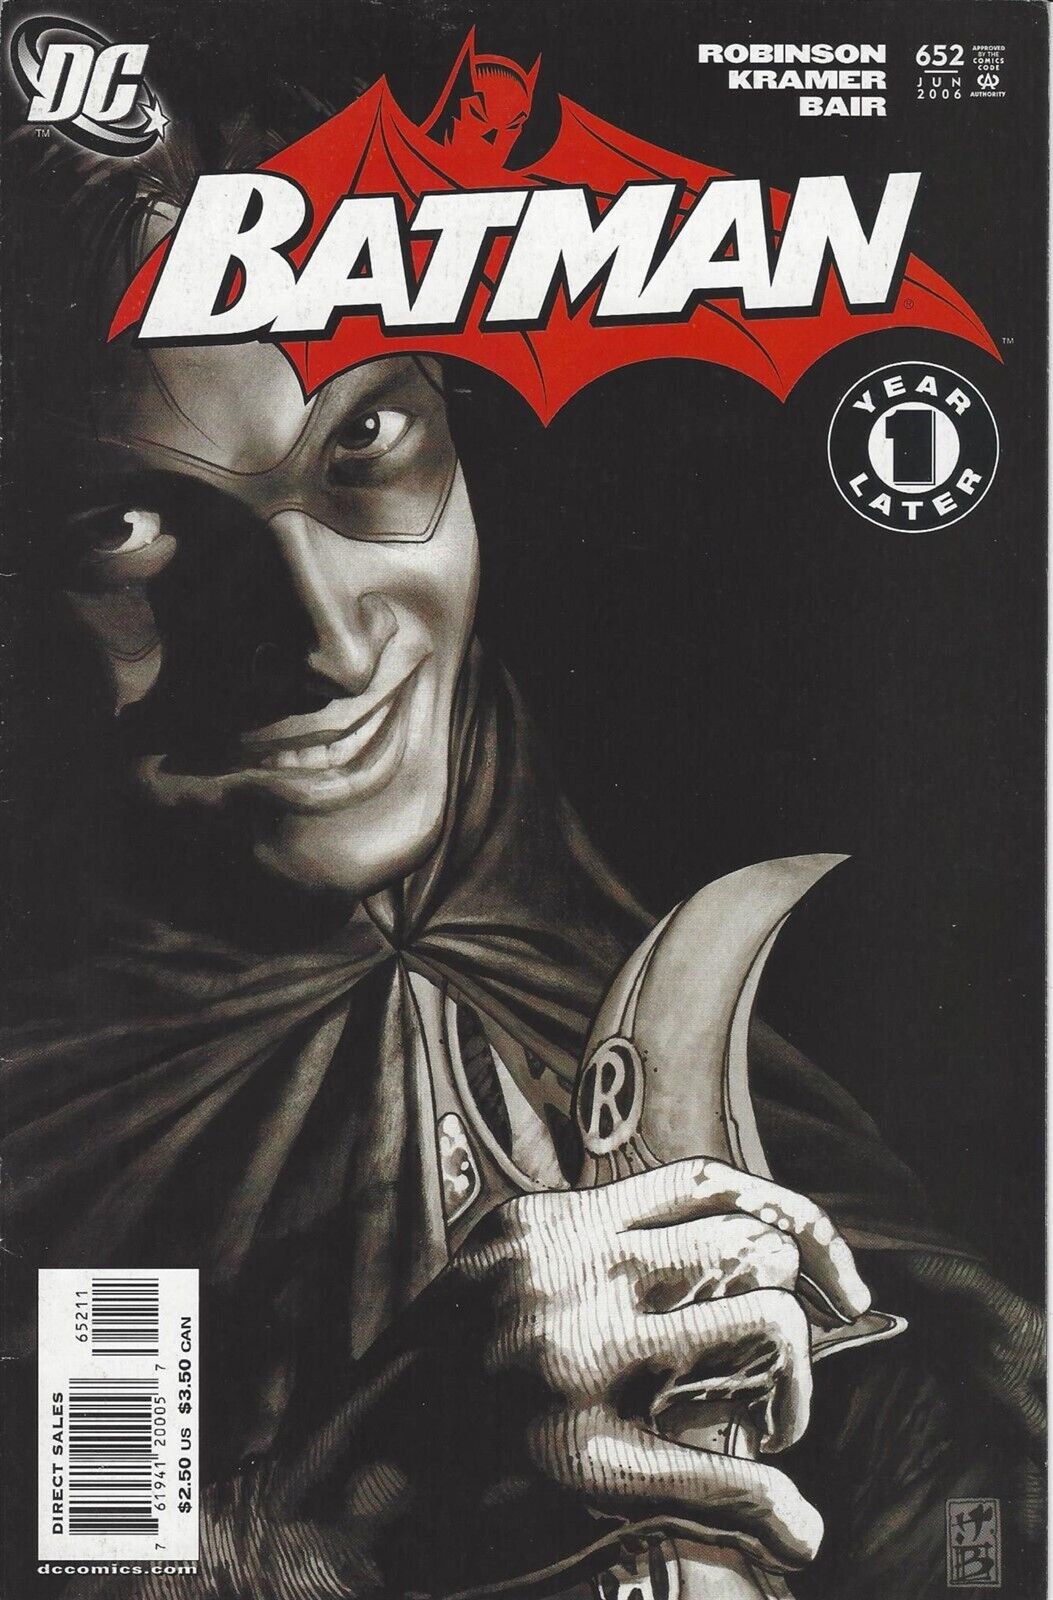 Batman #652 Face the Ecaf [Face the Face] Part 4 of 8